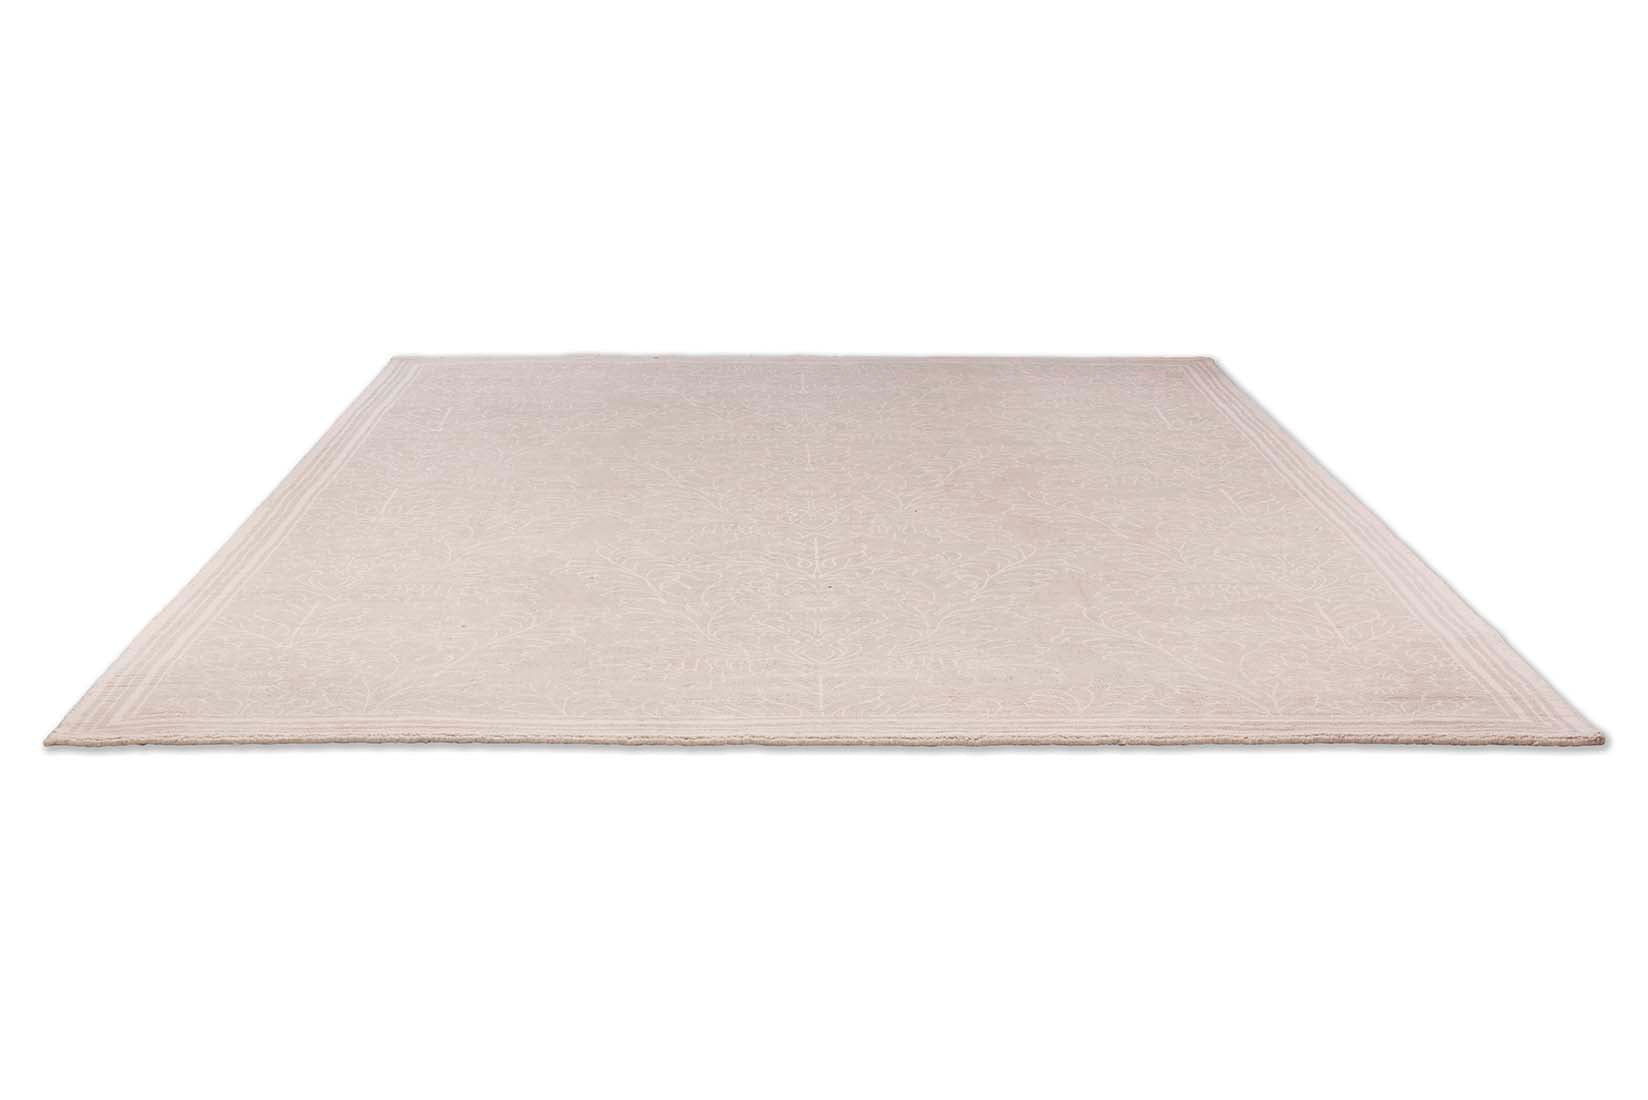 Grey cotton rug in damask pattern
